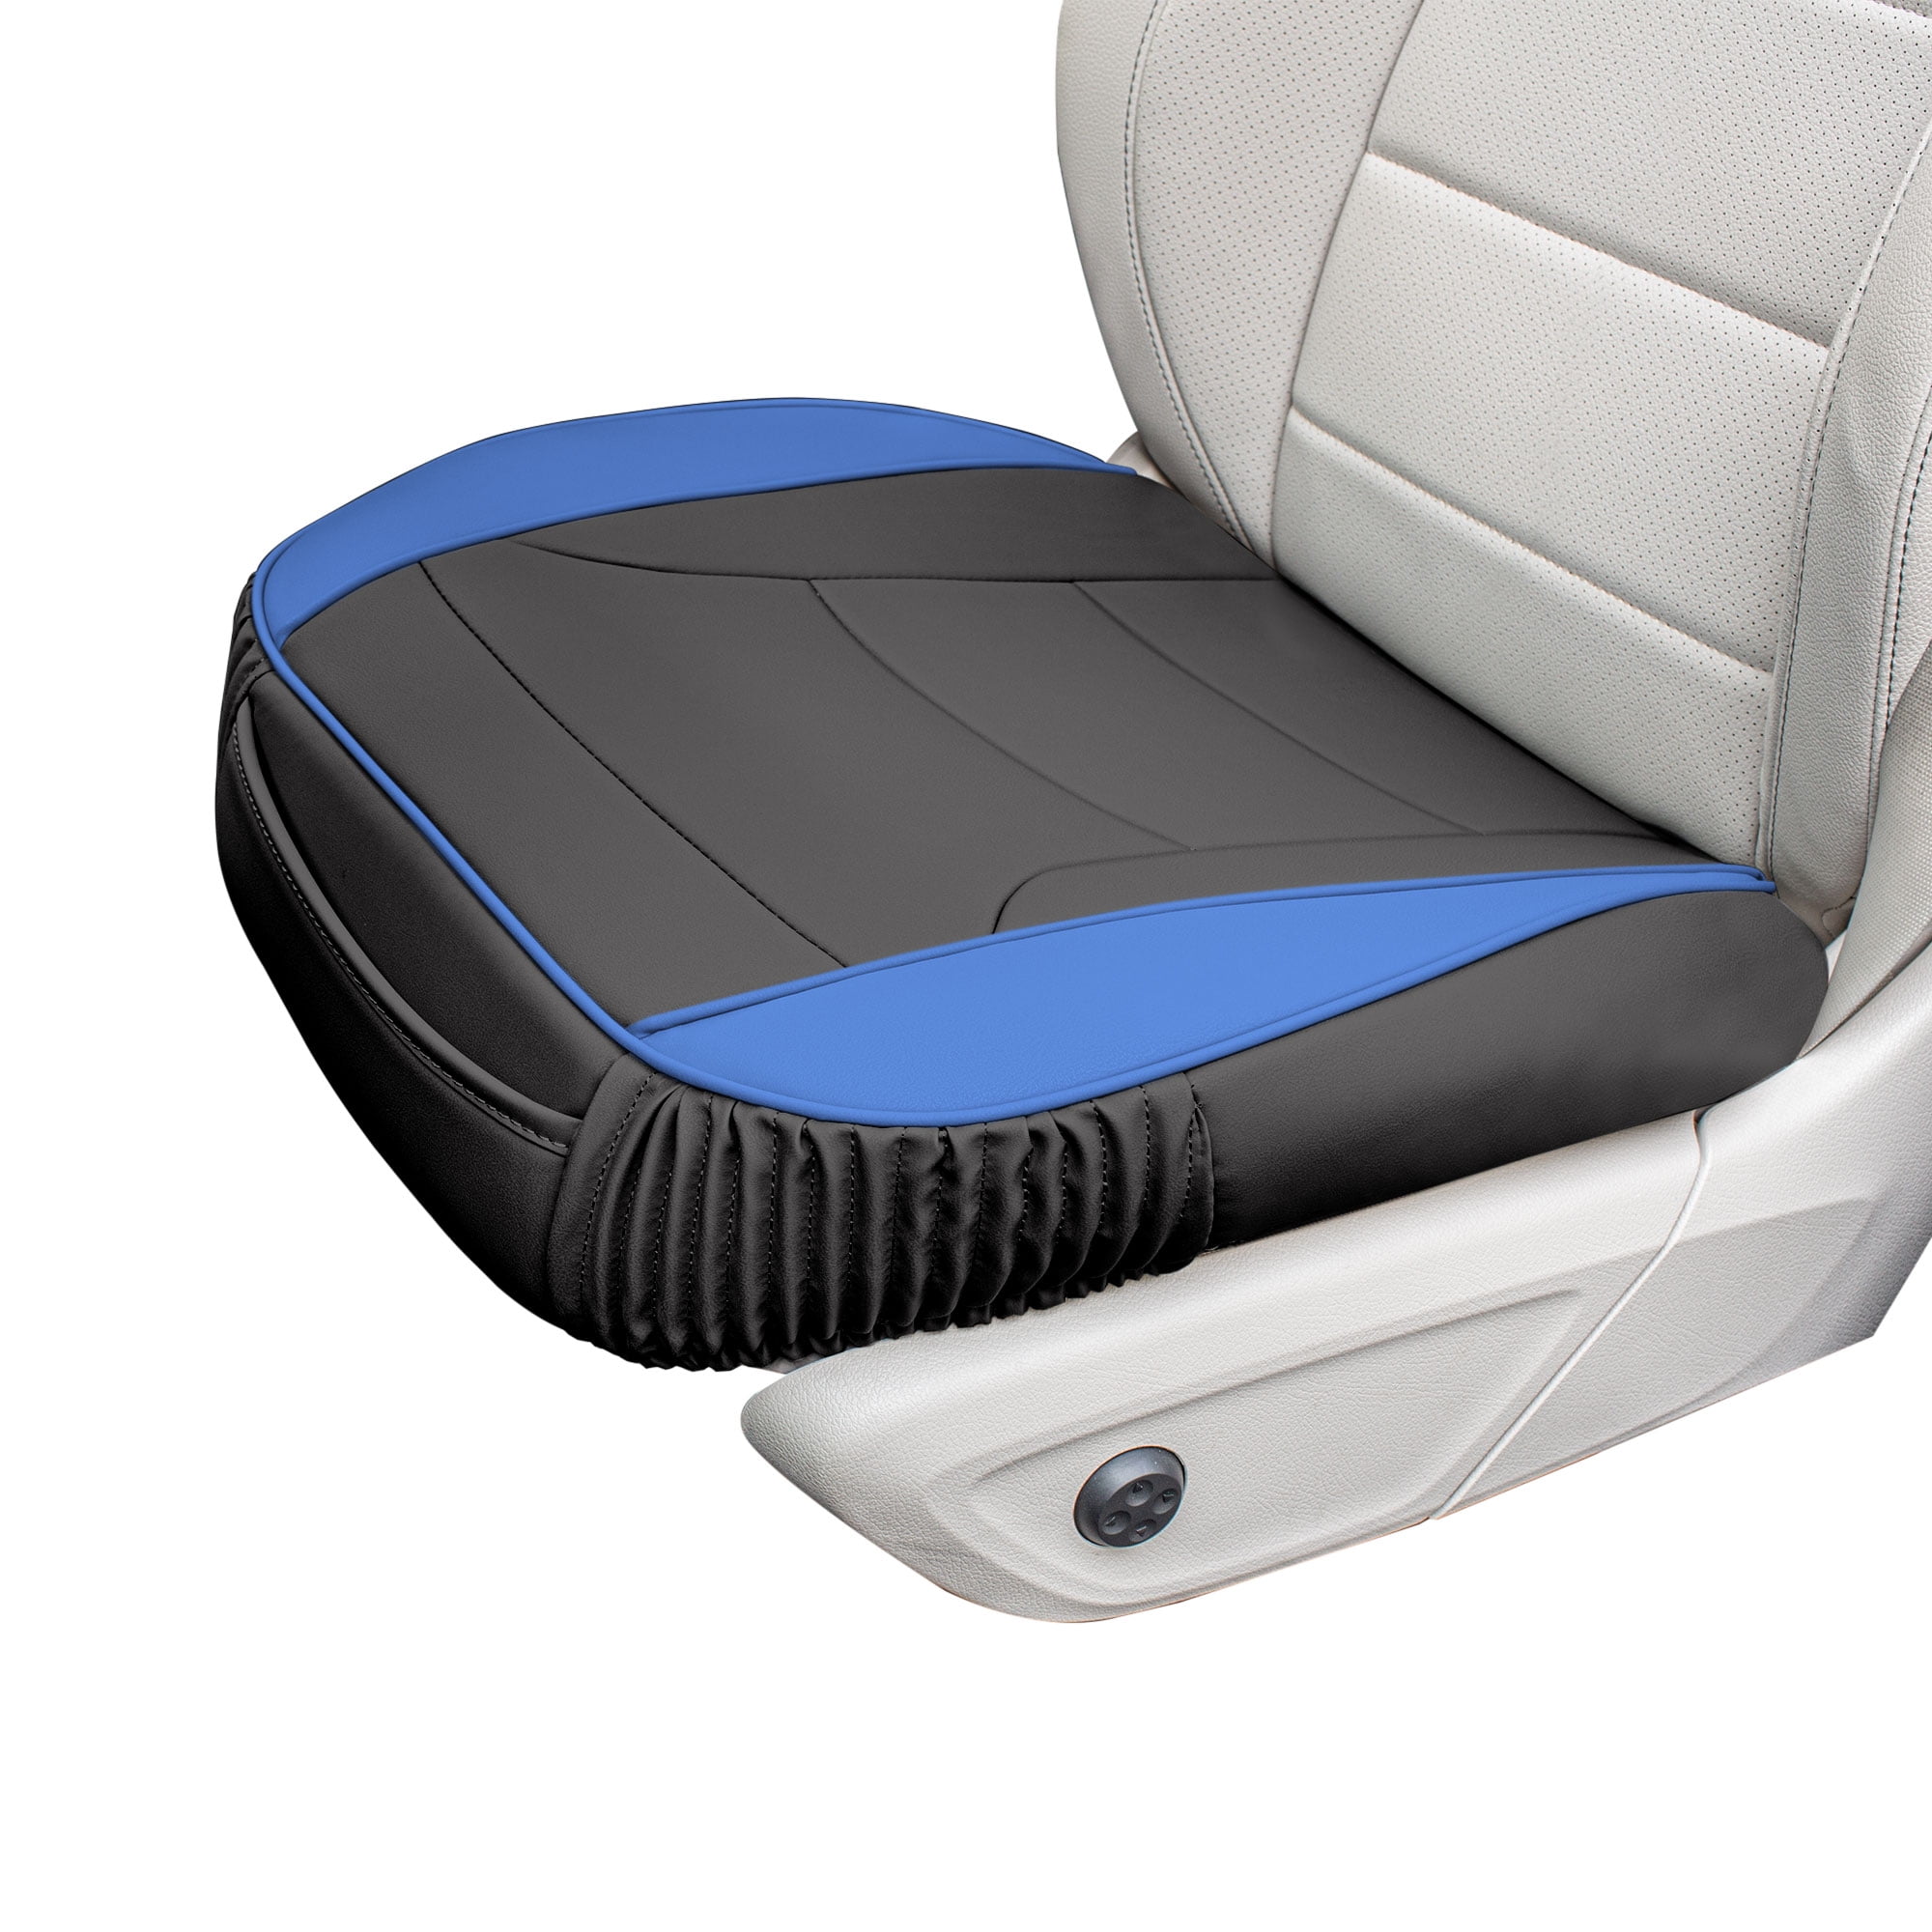 FH Group Car Seat Cushion – Durable Black PU Leather Car Seat